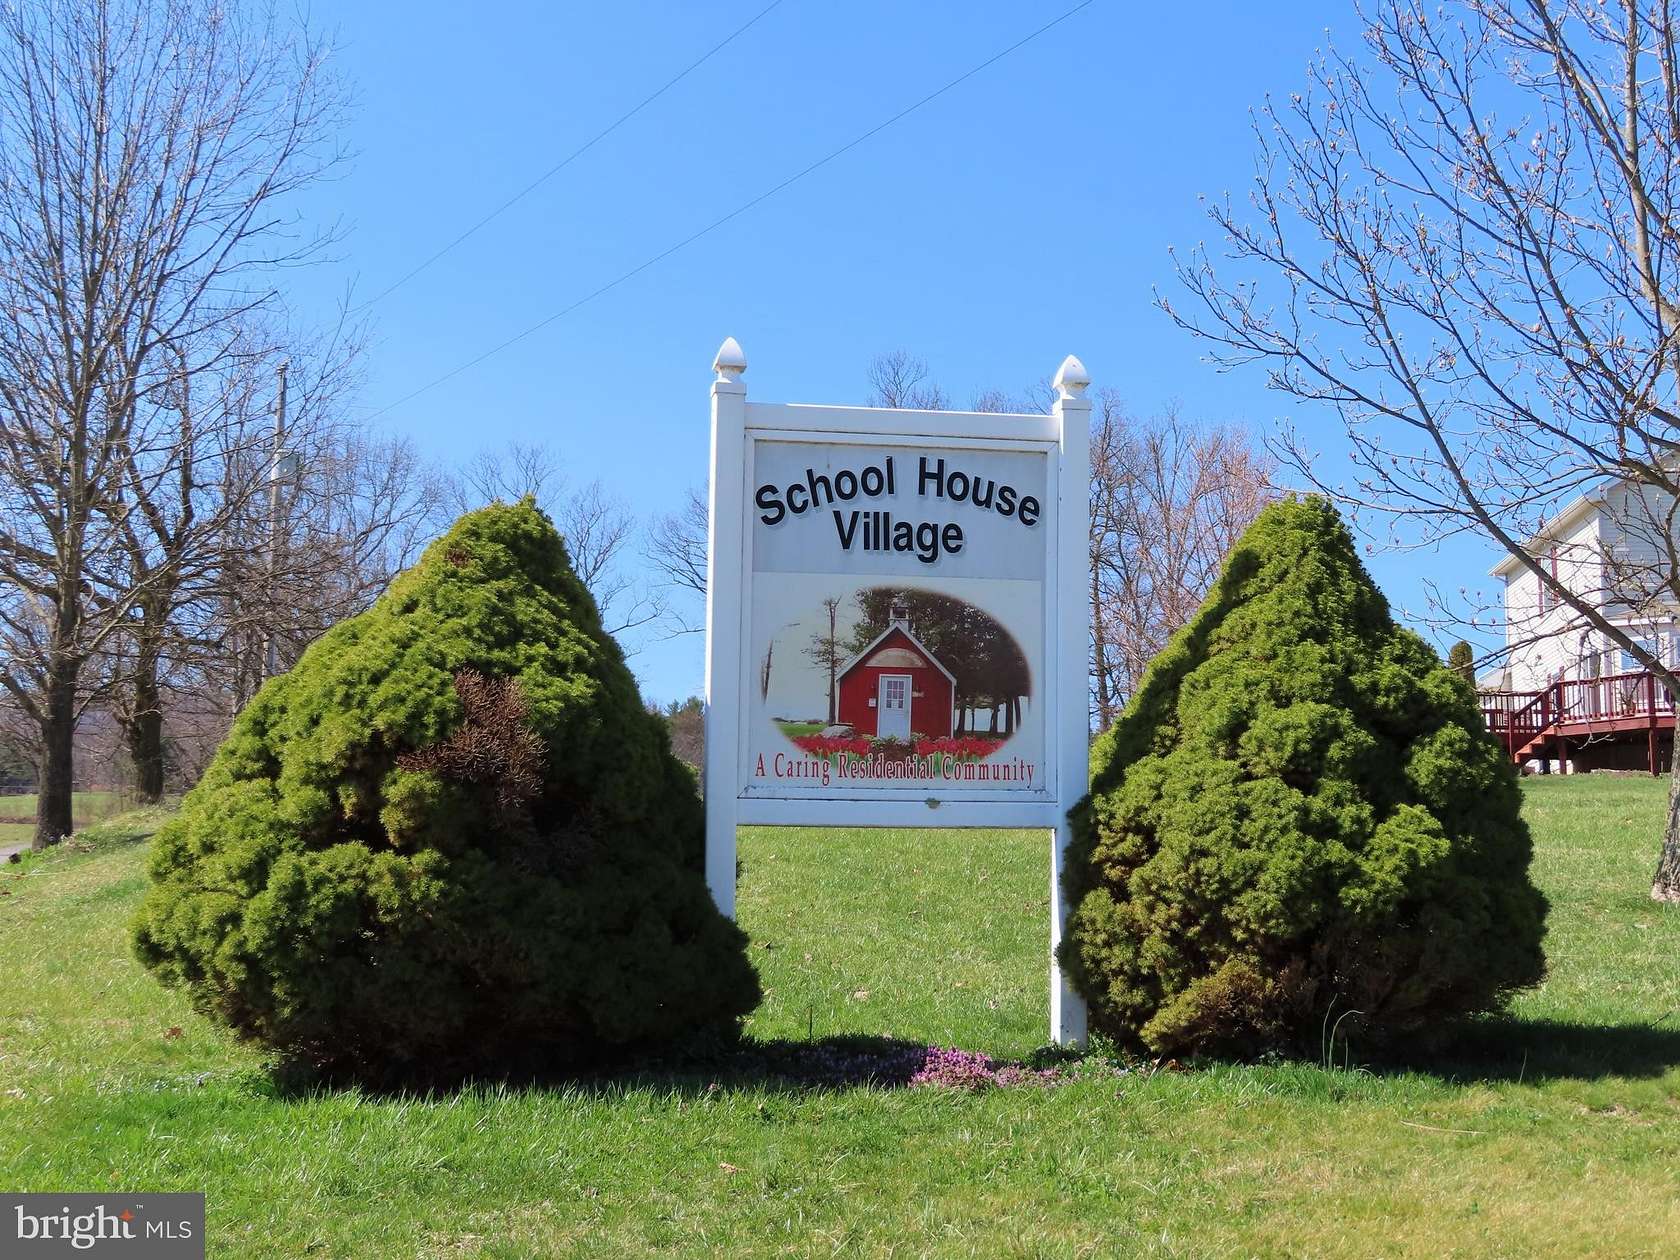 0.33 Acres of Residential Land for Sale in Harrisonville, Pennsylvania